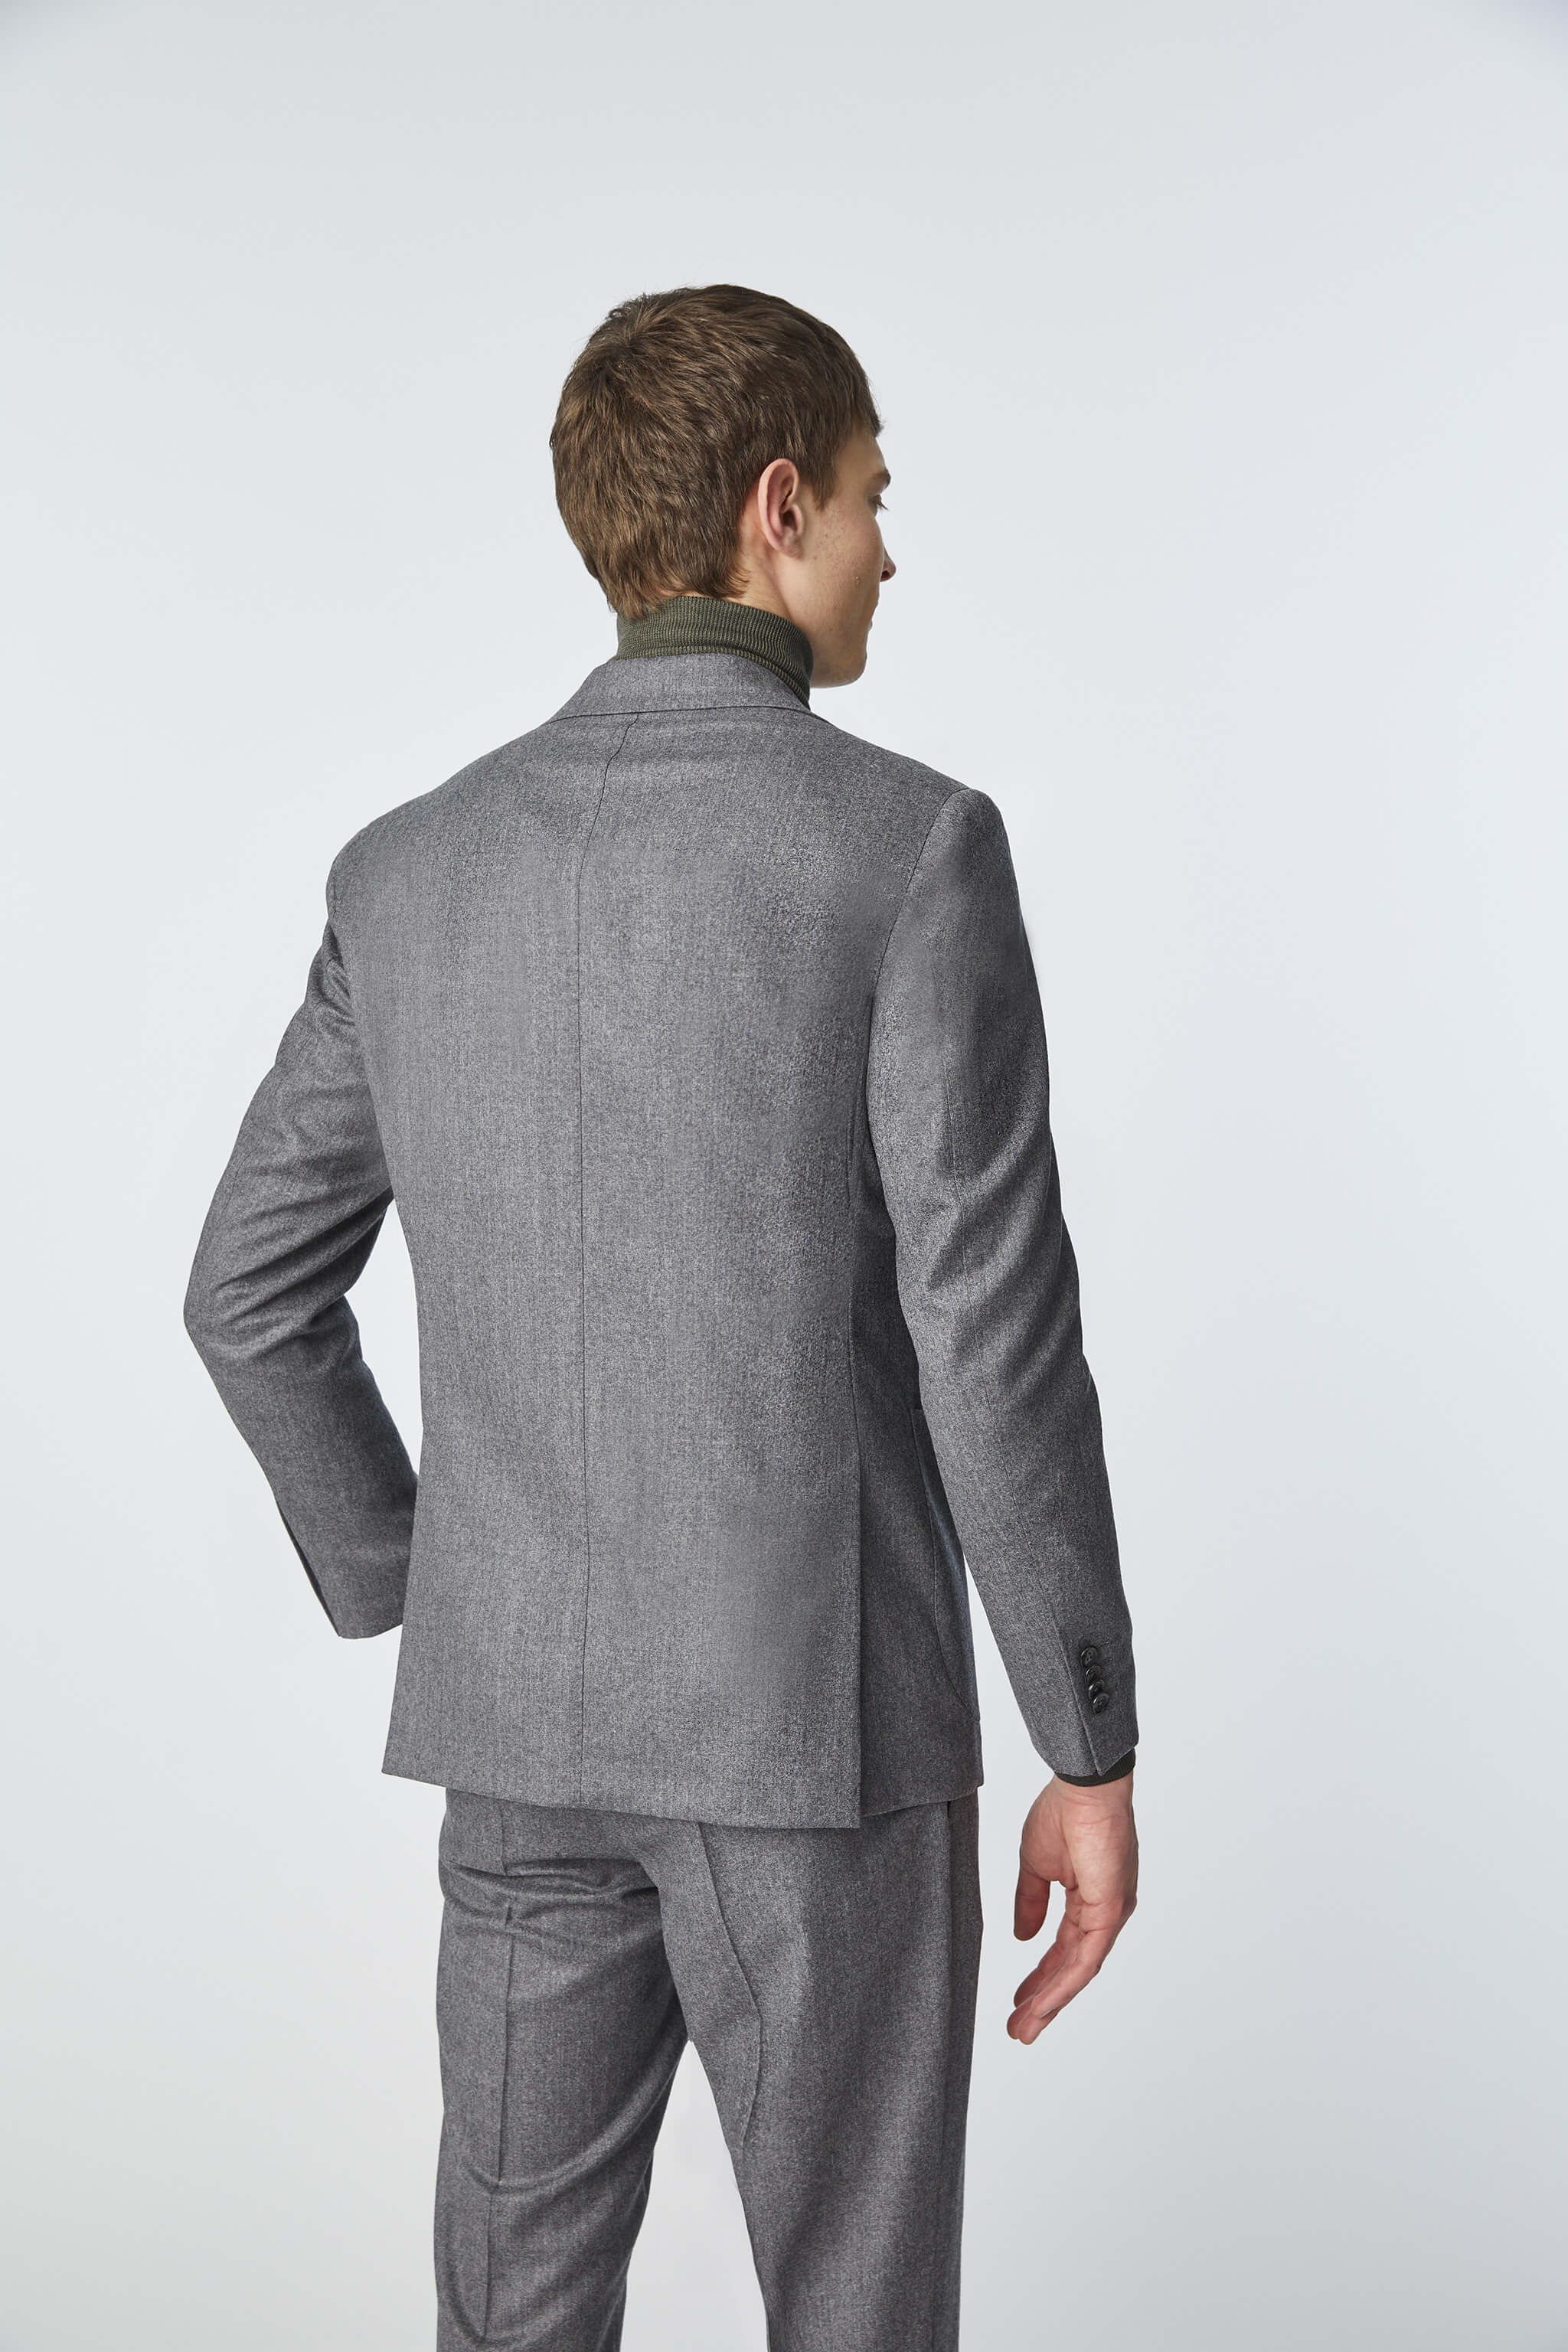 JACK suit in gray